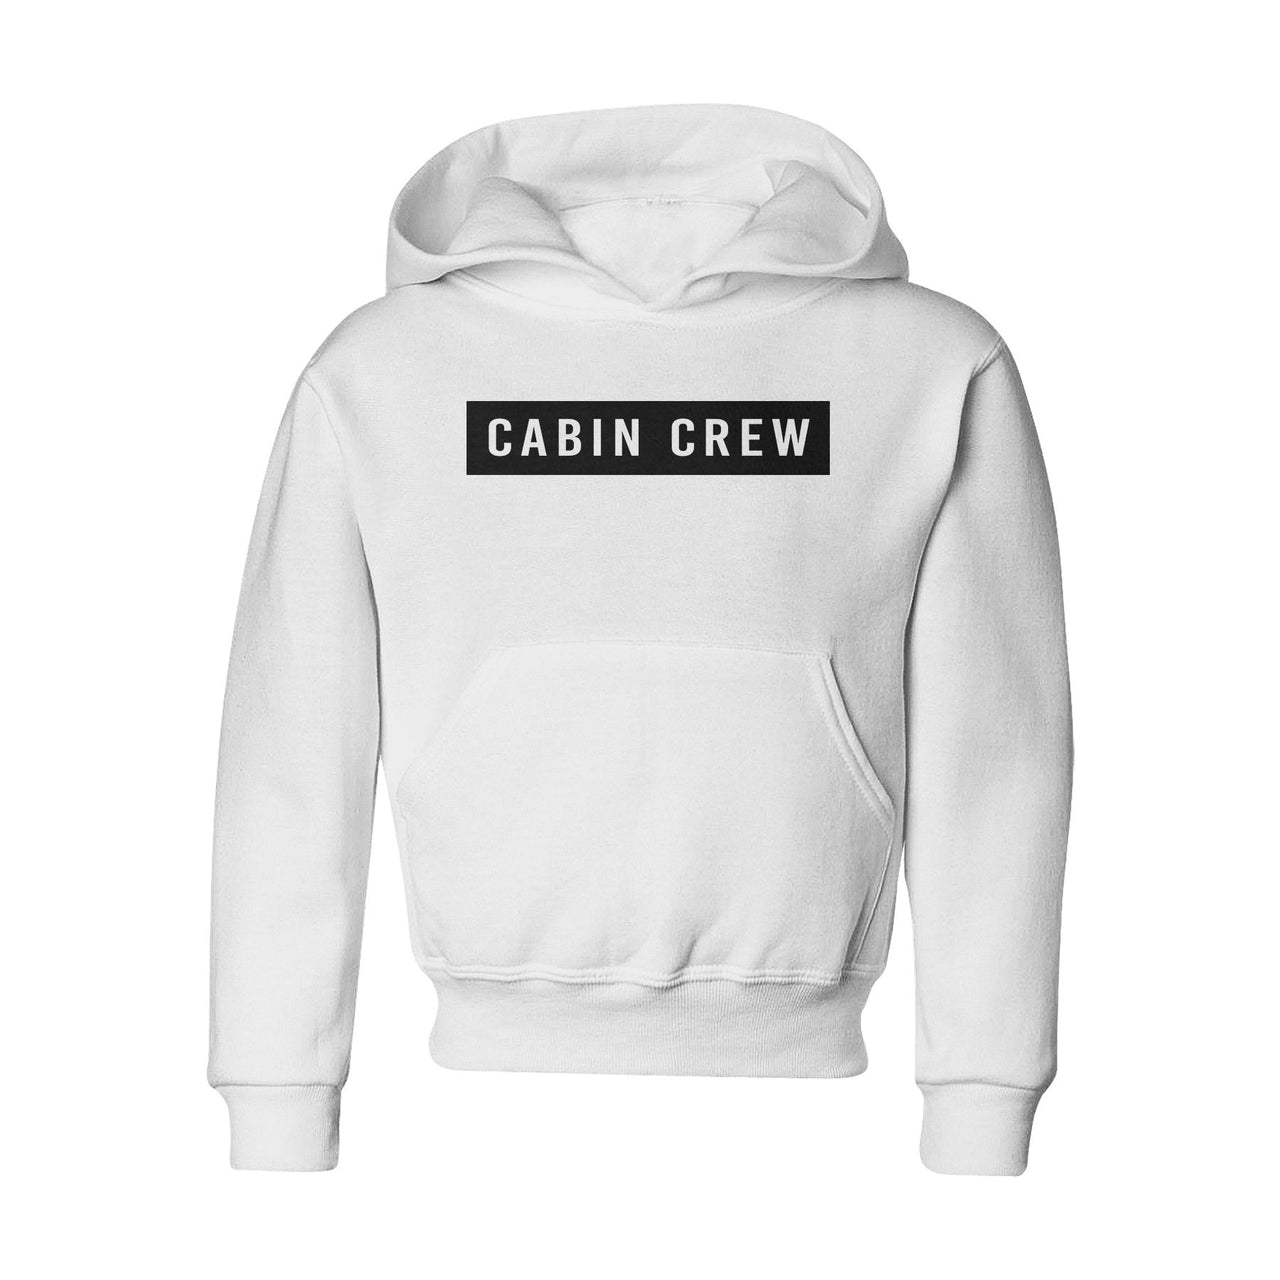 Cabin Crew Text Designed "CHILDREN" Hoodies